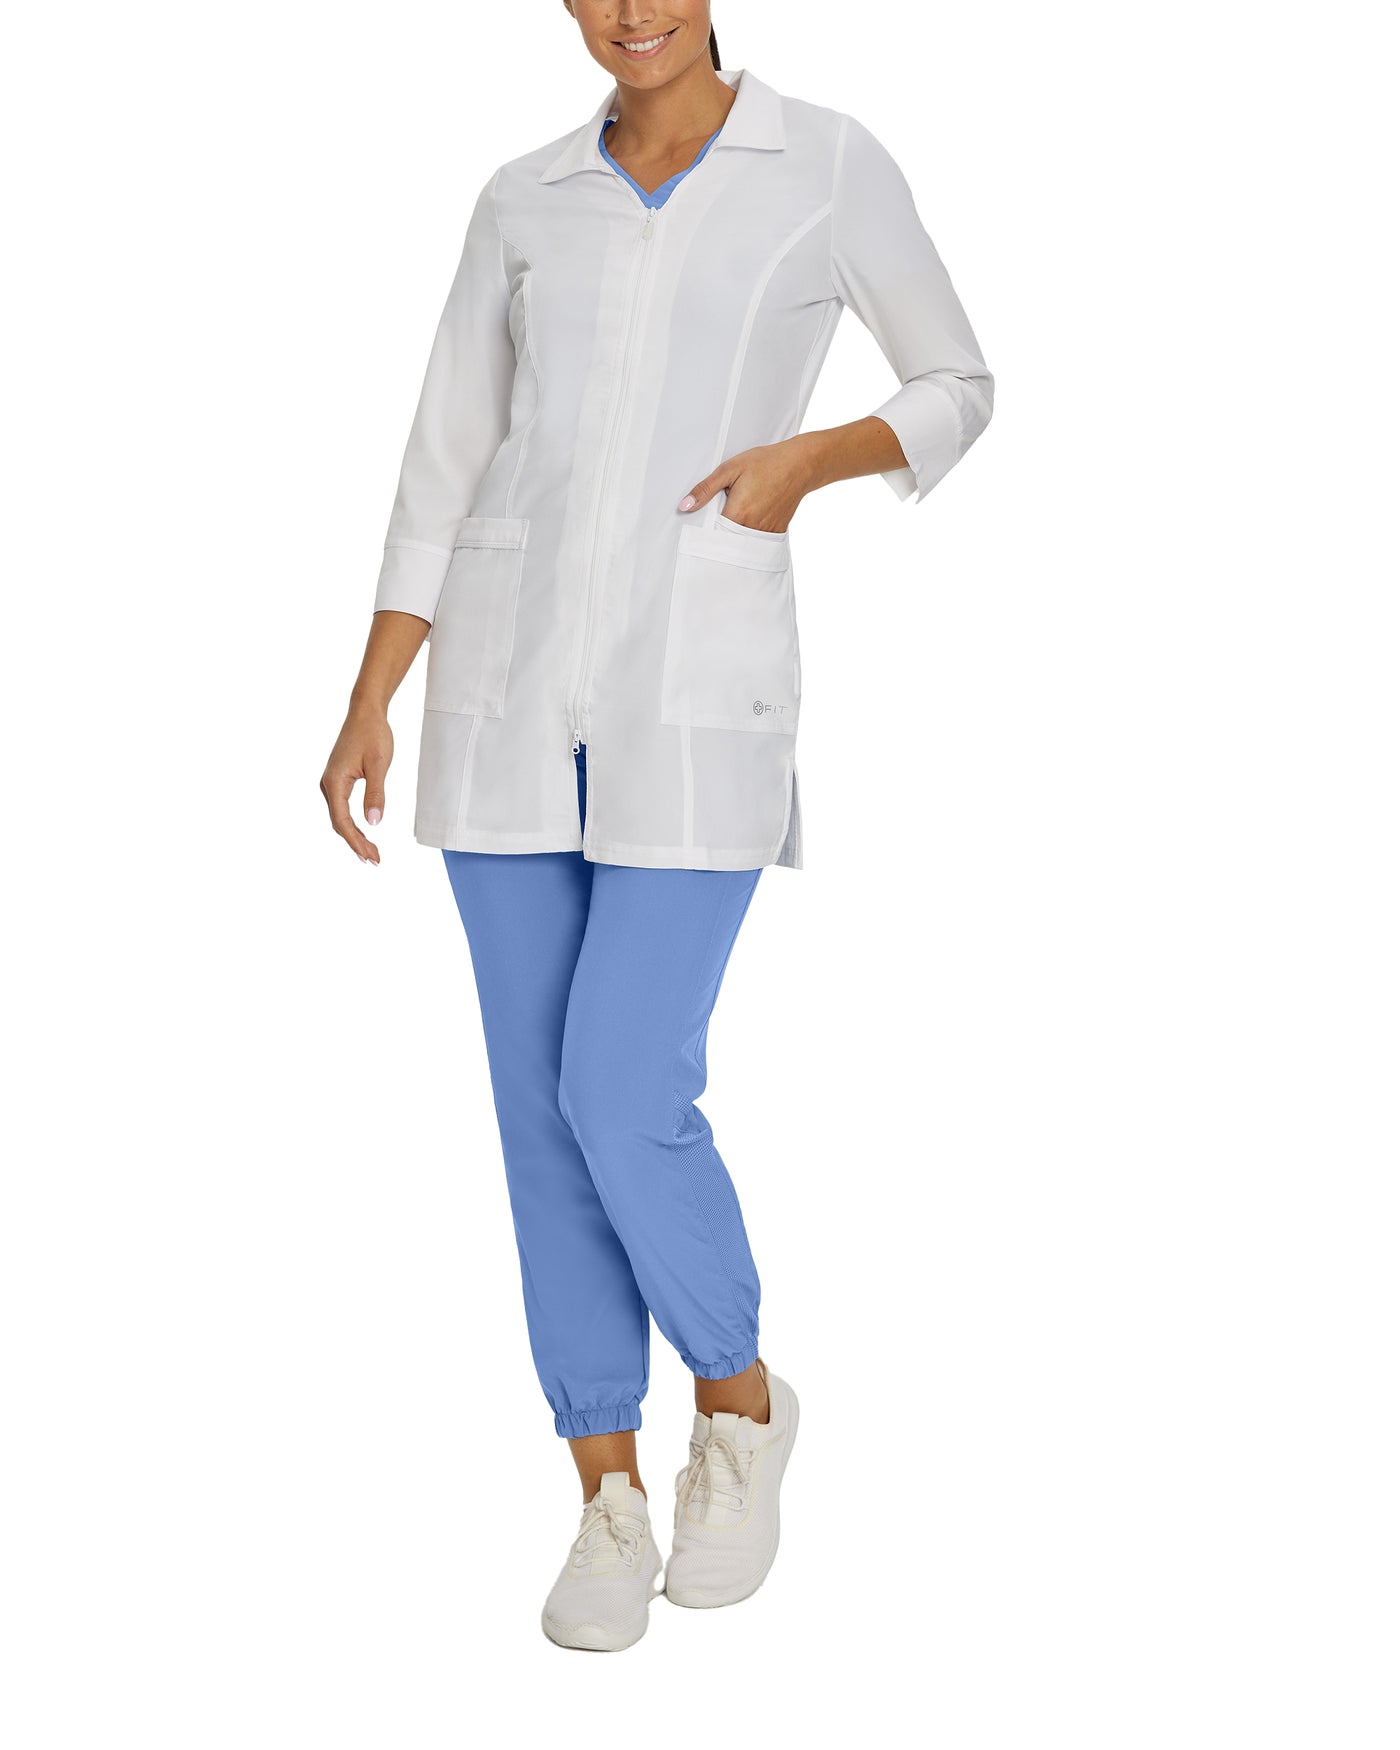 White - White Cross Fit 32" Women's Lab Coat